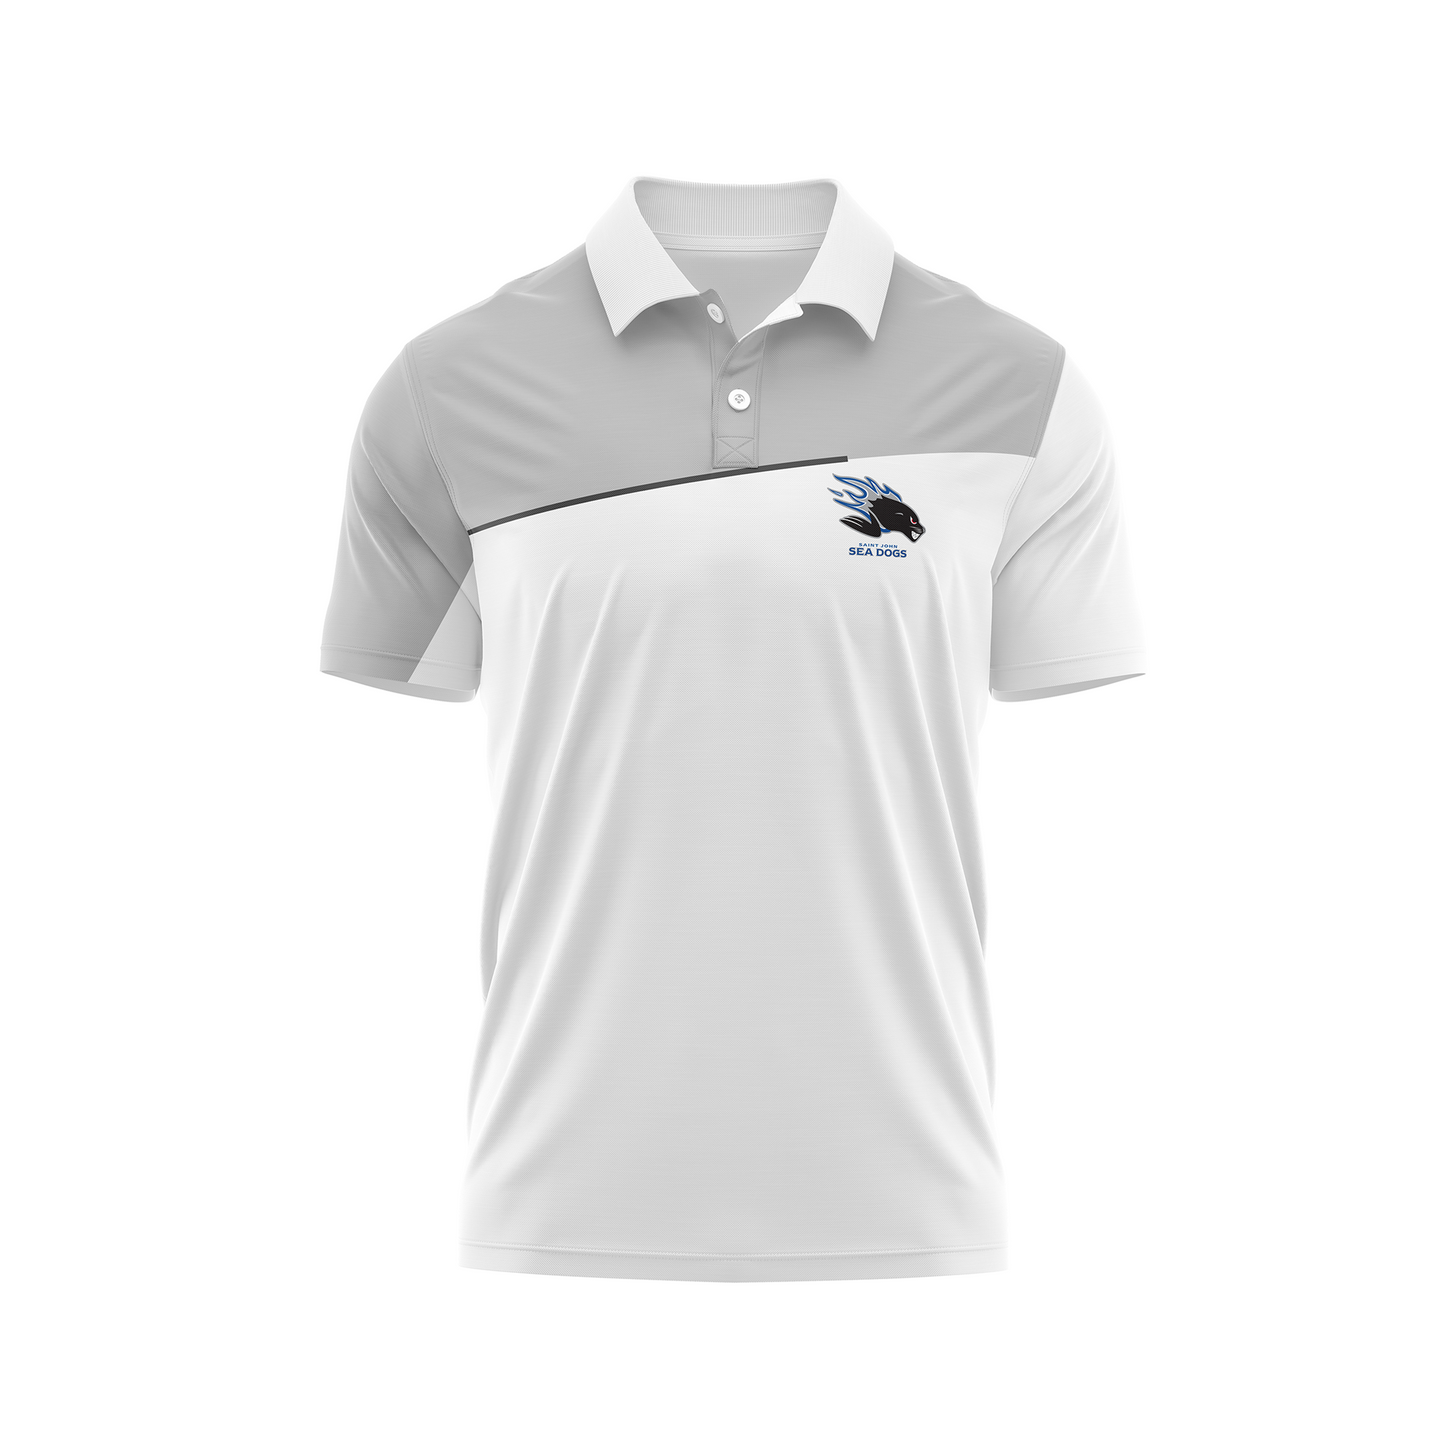 Golf Shirt - Prater White